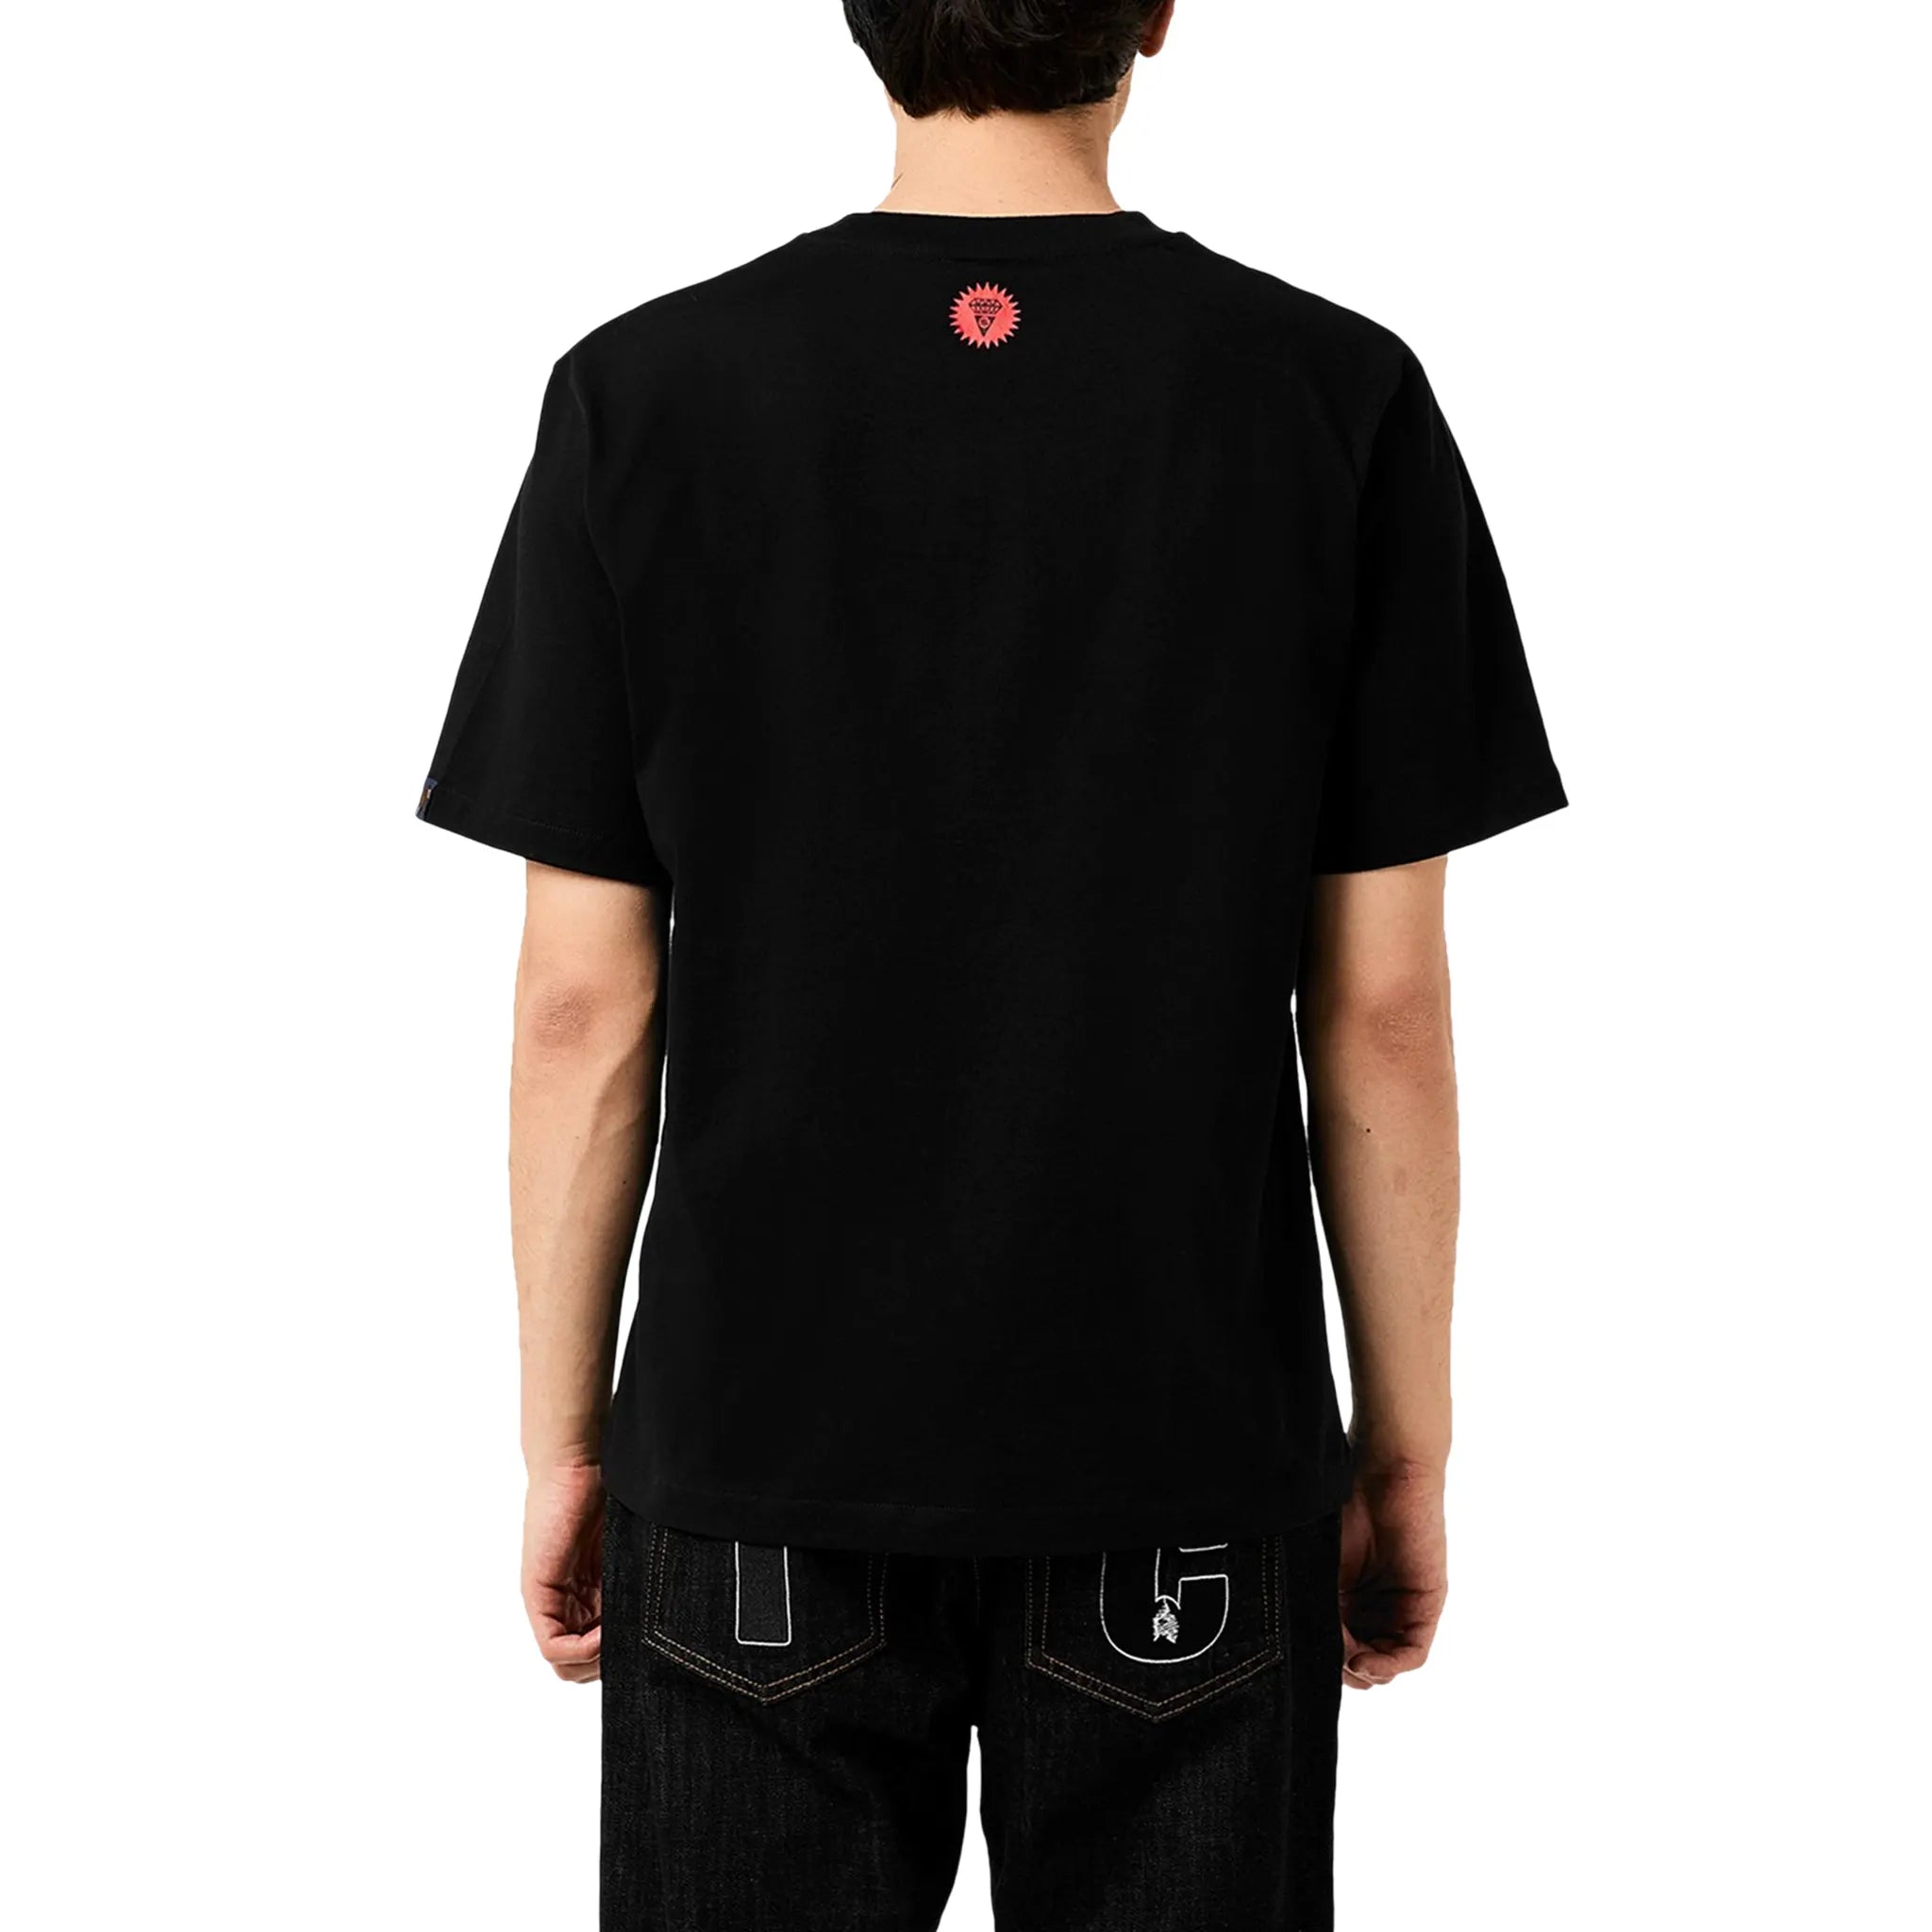 Back Detail view of Icecream IC Drippy Black T Shirt ic23439-blk